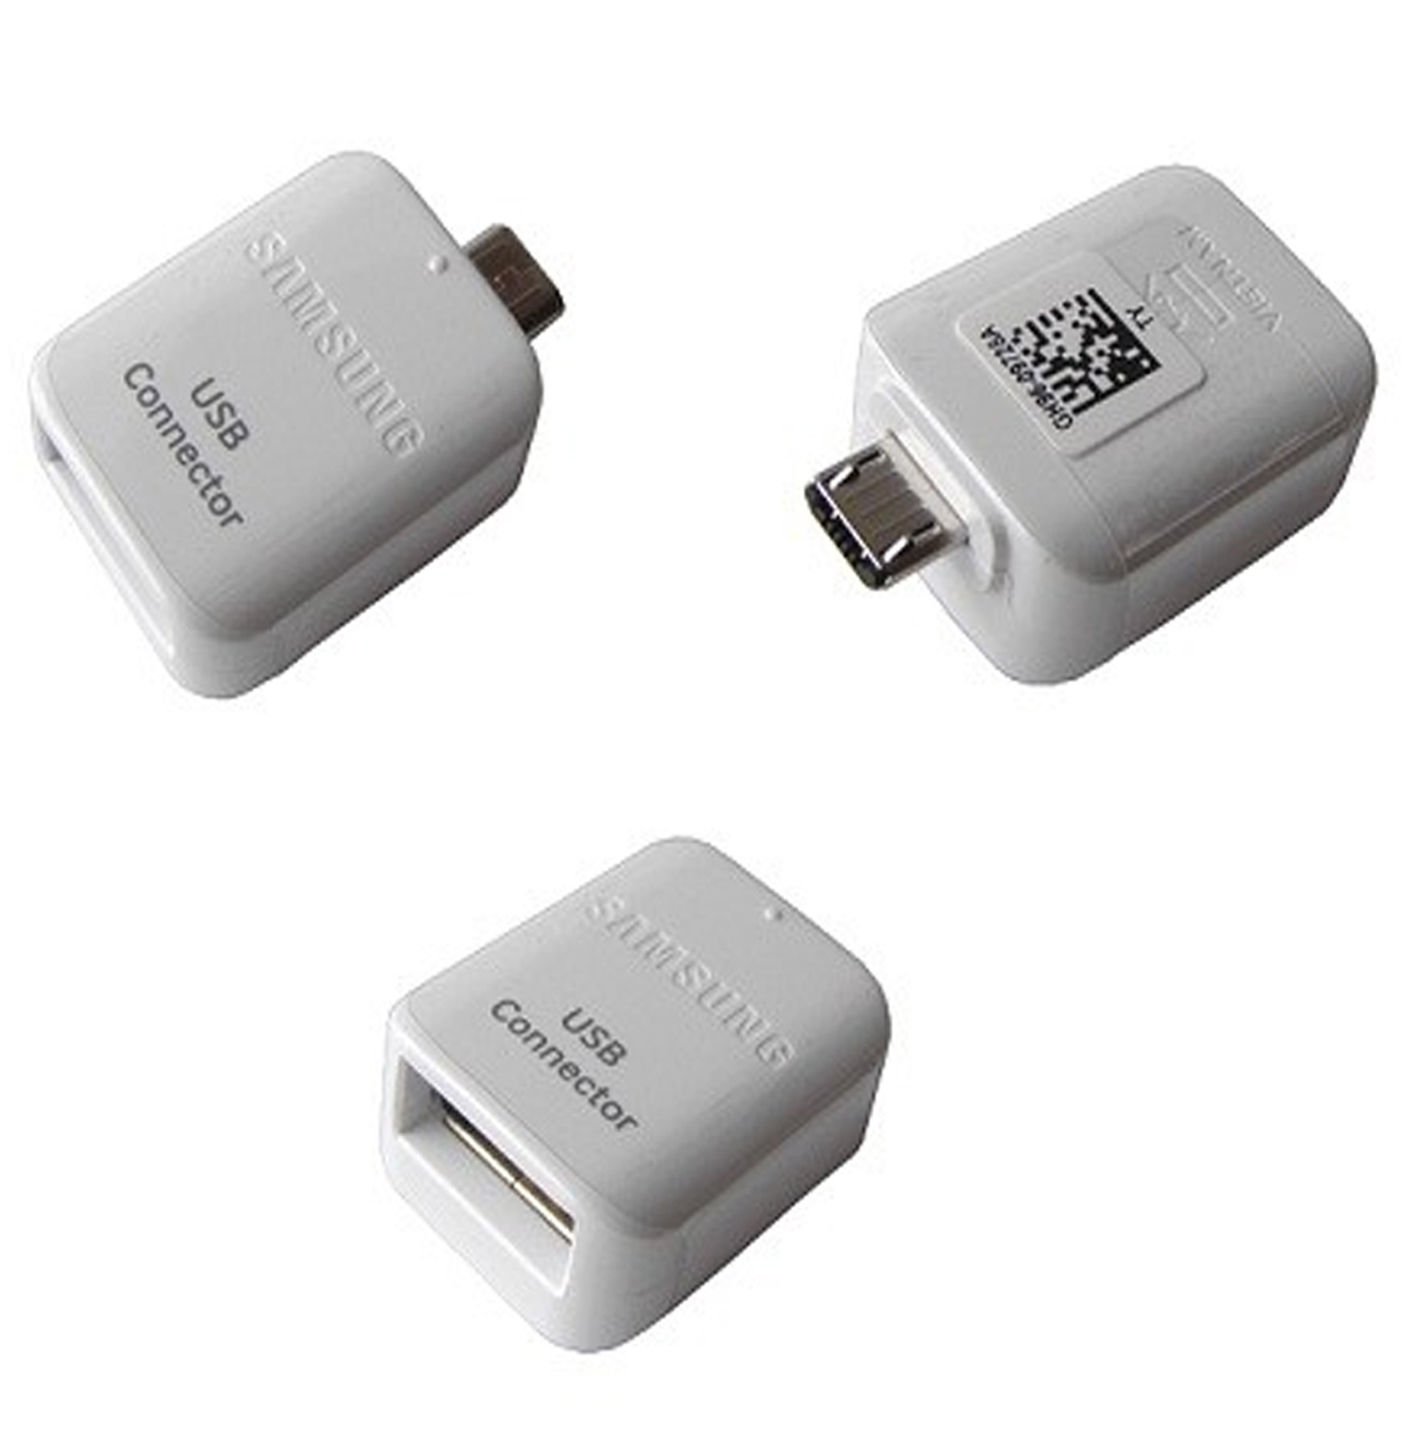 Samsung Micro USB to USB 2.0 Adapter OTG - GH96-09728A - White